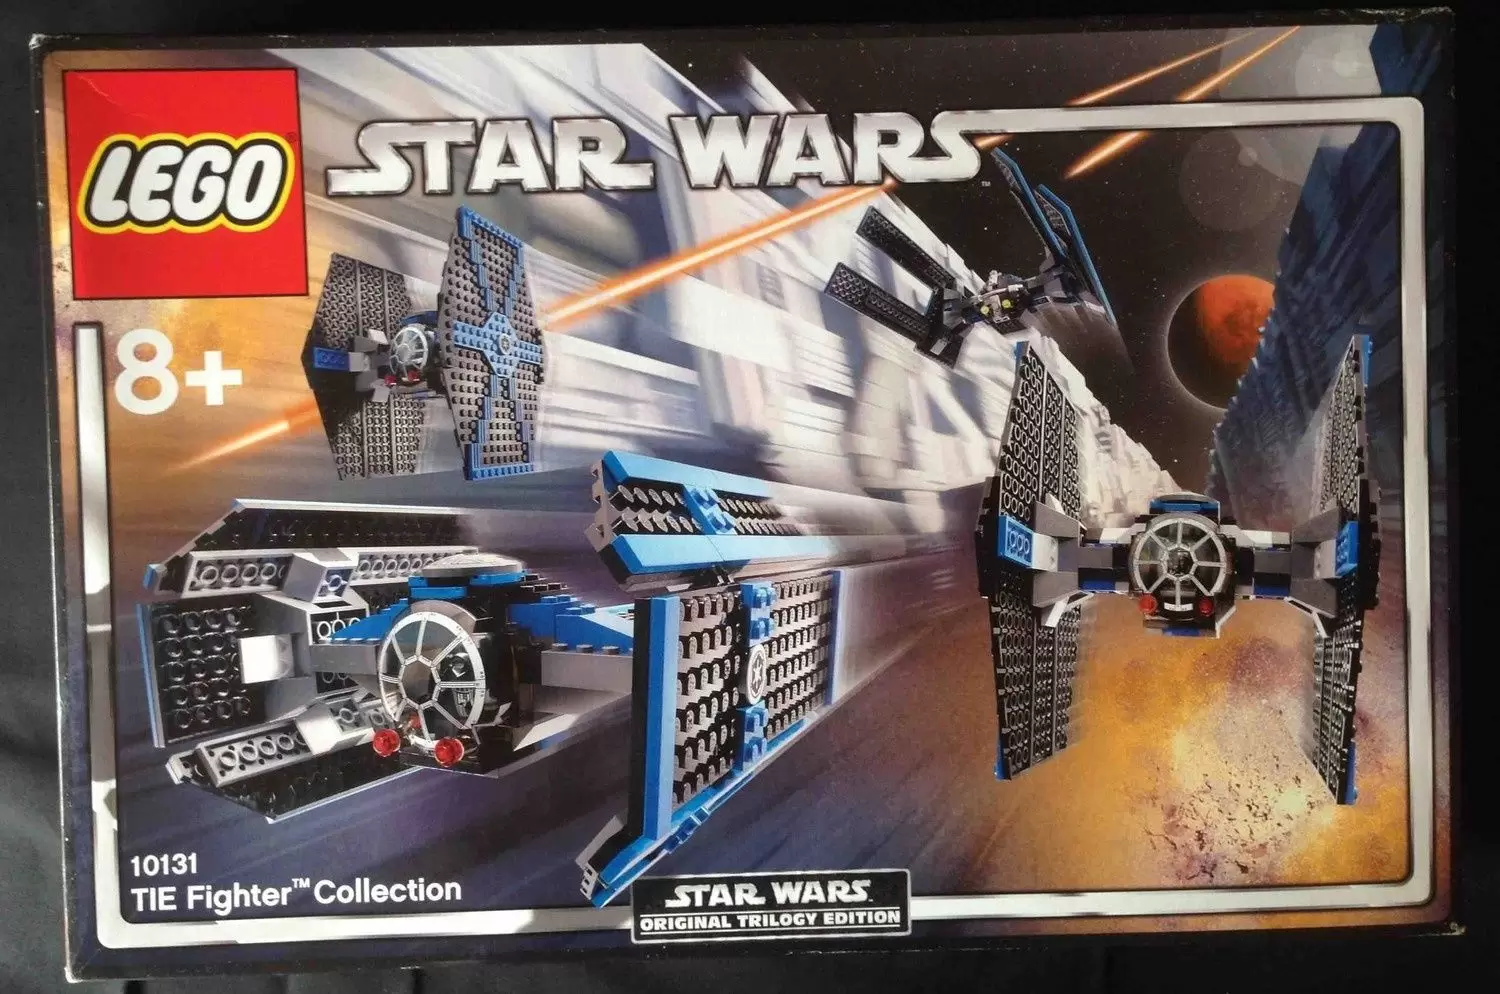 TIE Fighter Collection - LEGO Star Wars set 10131